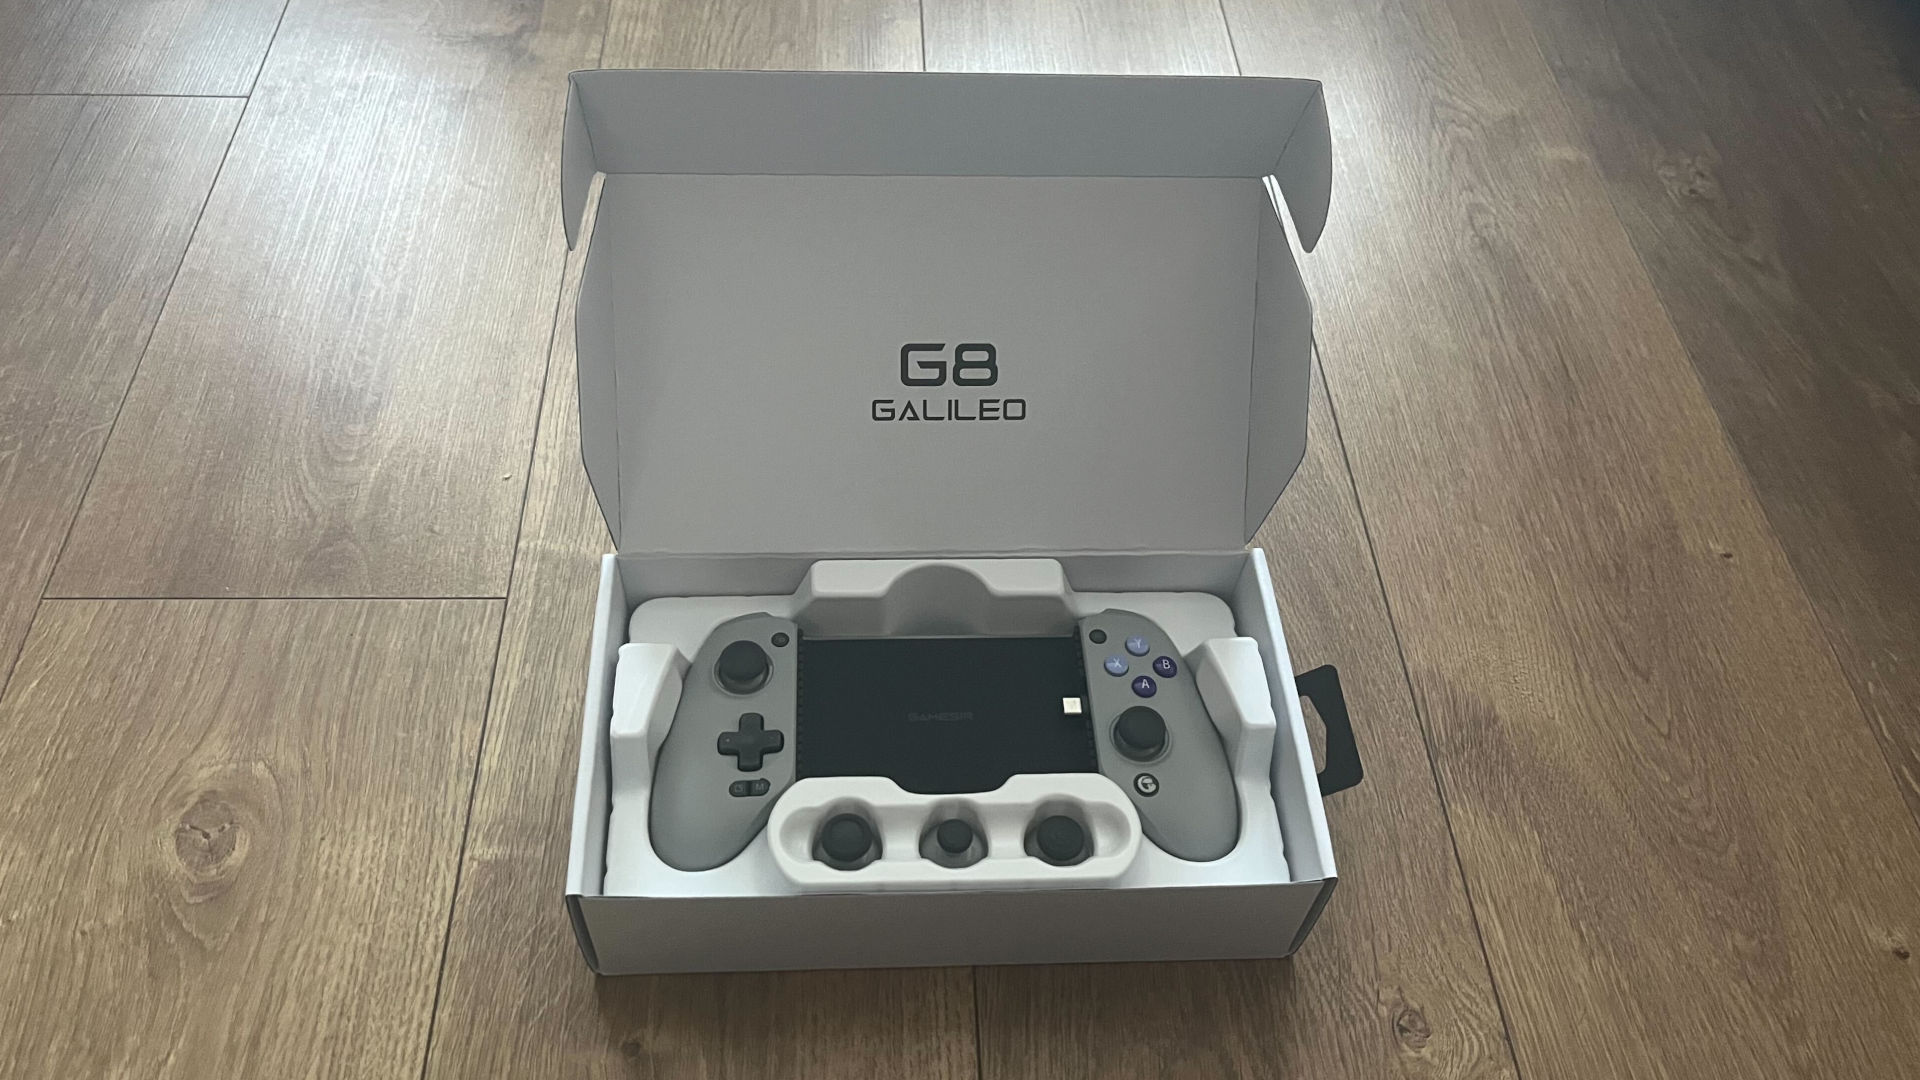 GameSir G8 Galileo - Review - Coolsmartphone